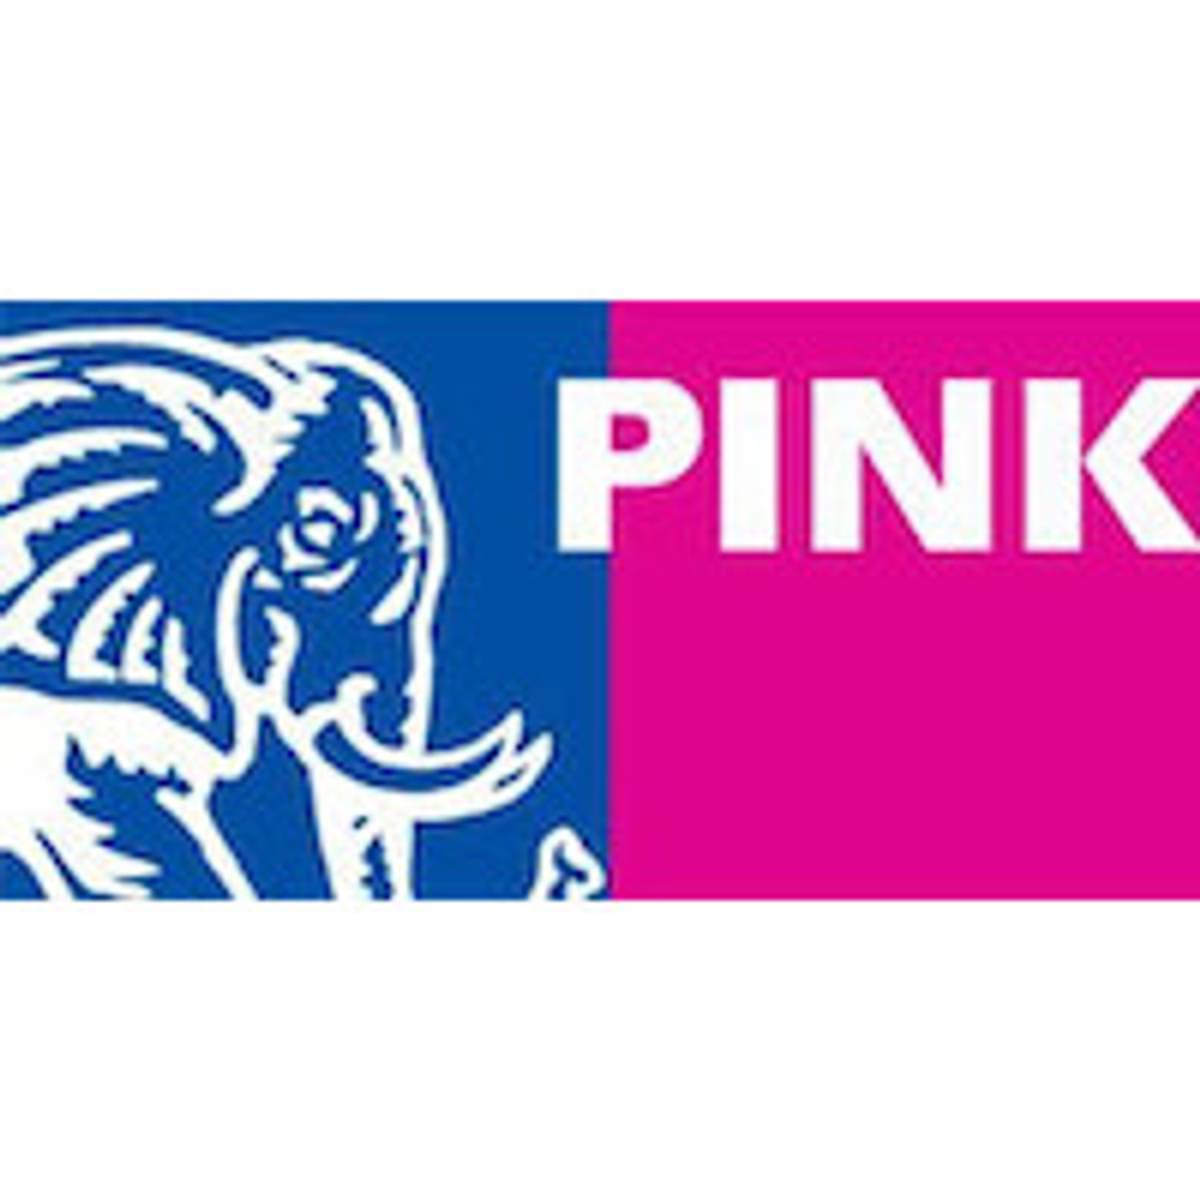 True Workspace Zuid-Nederland heet per mei Pink Elephant Zuid image